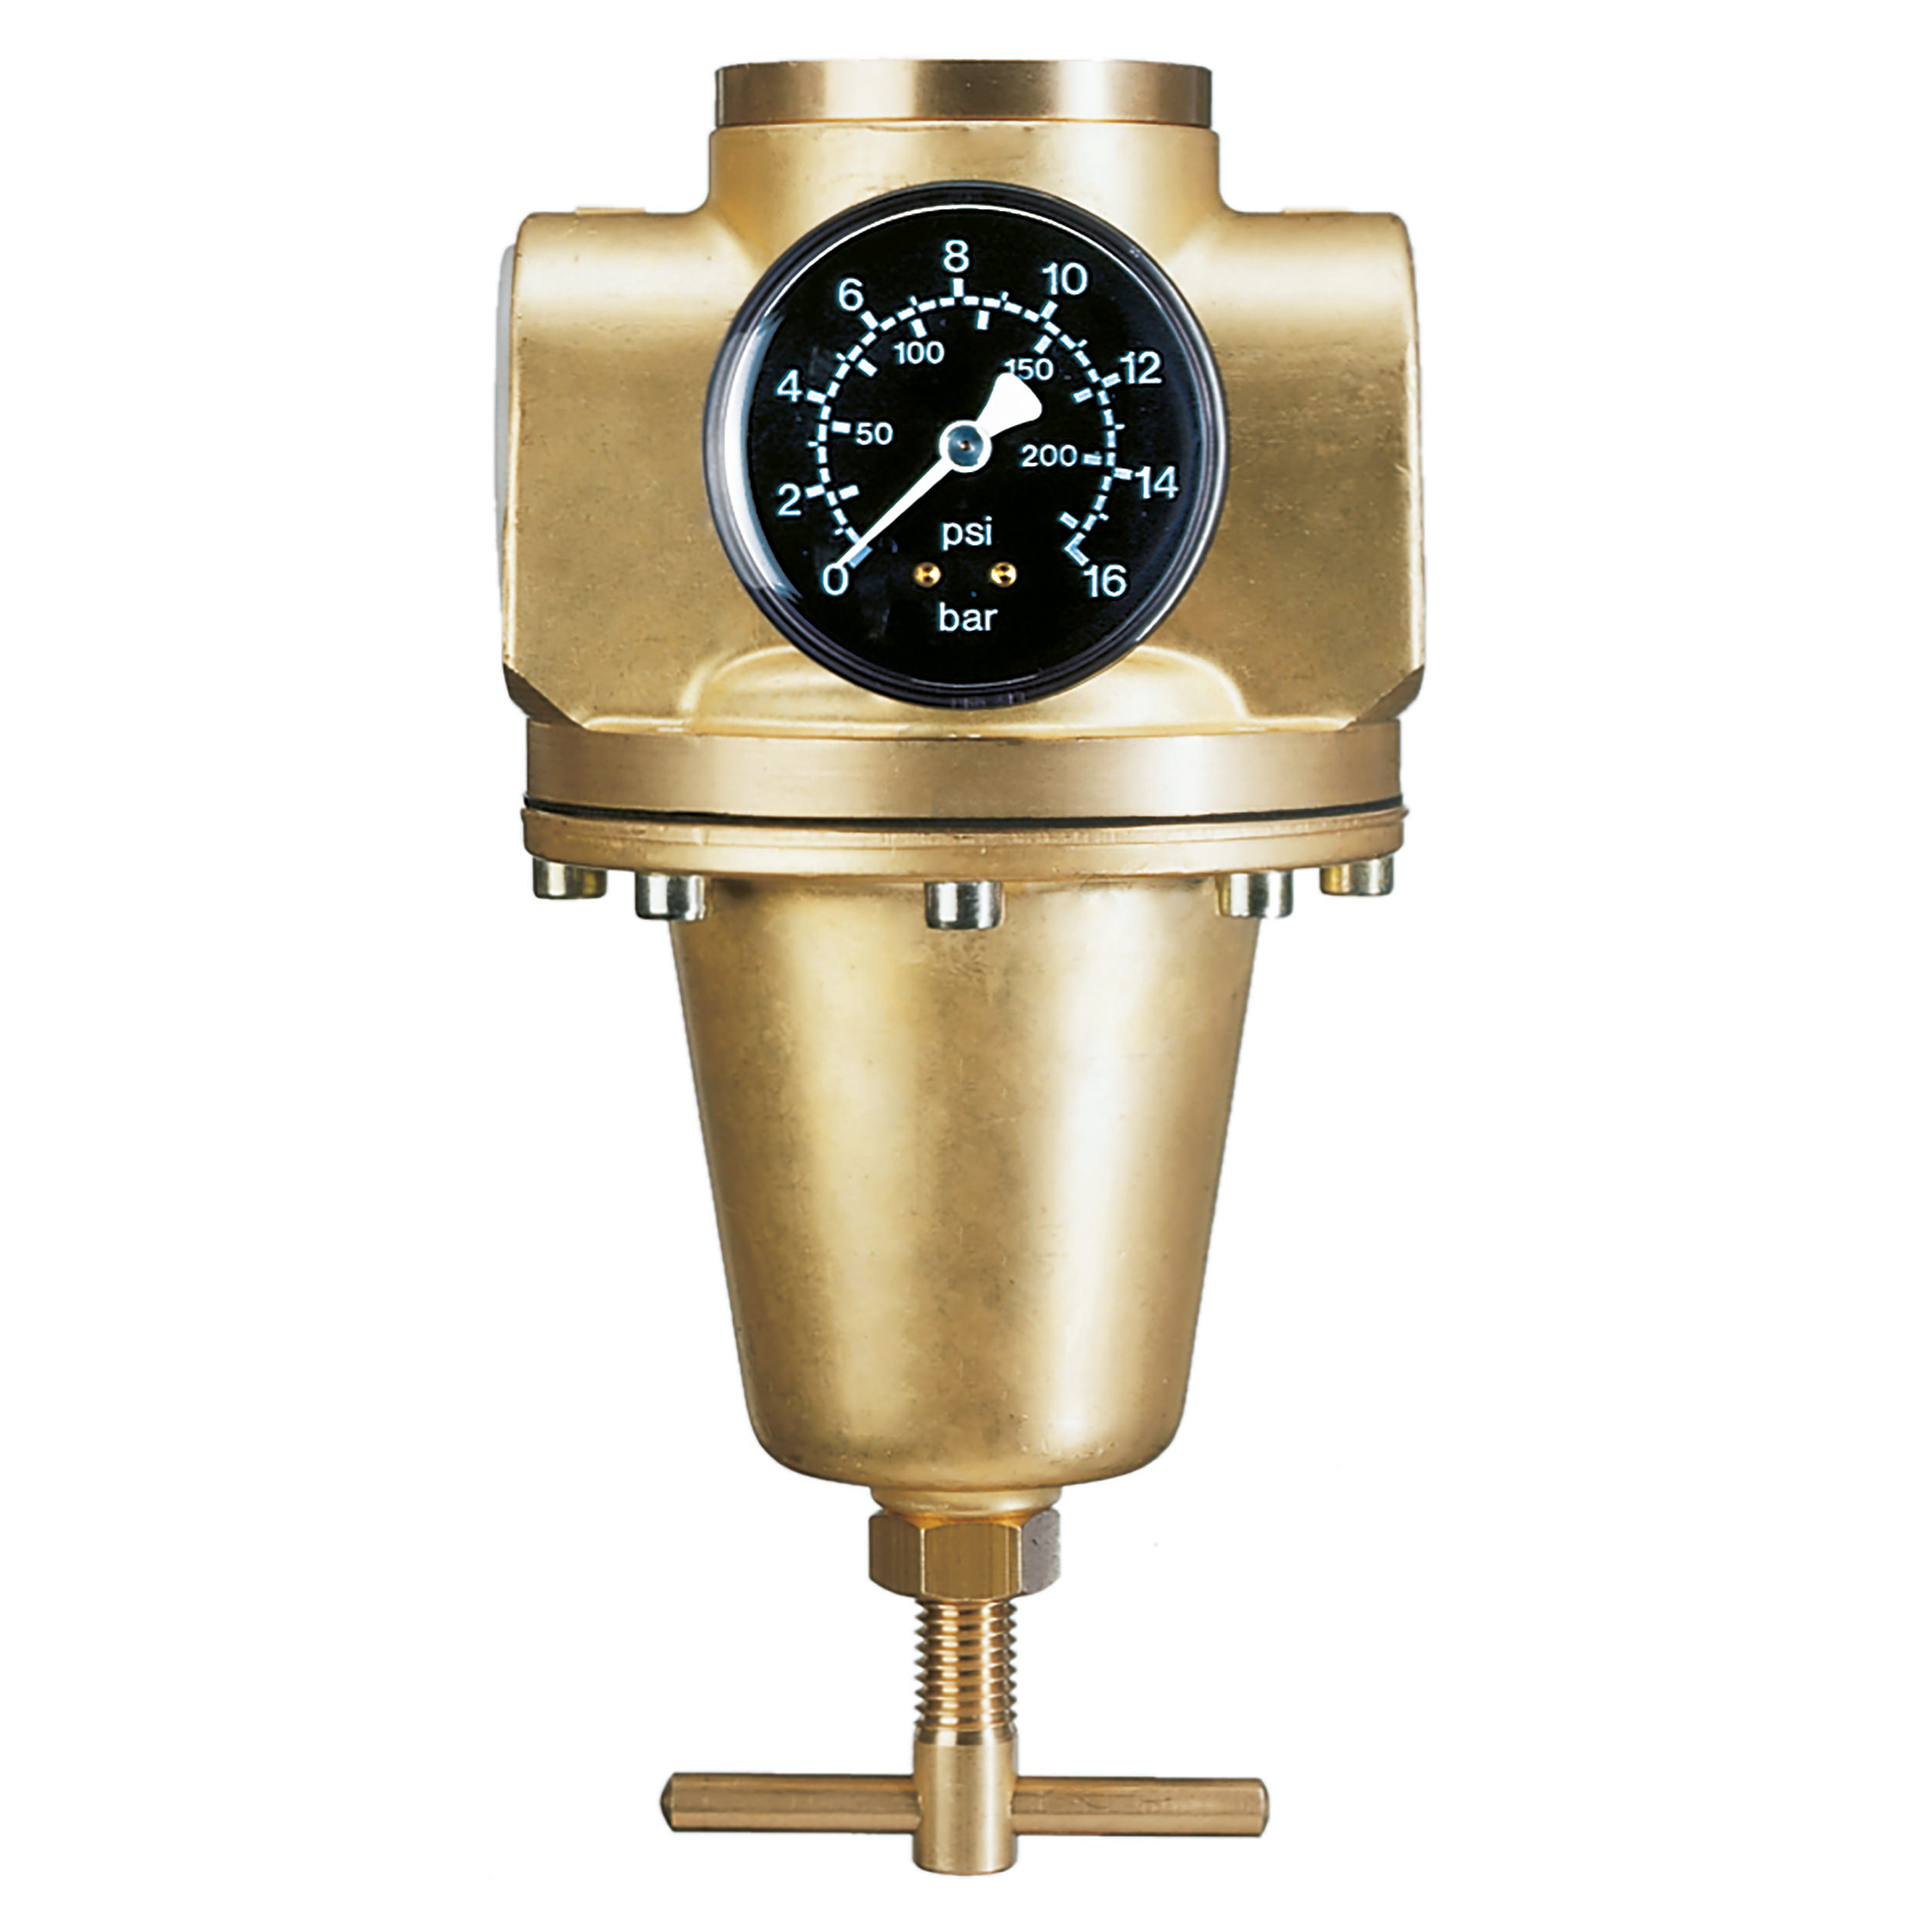 Pressure regulator standard, BG 55, G1, 7–43.5 psi, toggle, no gauge